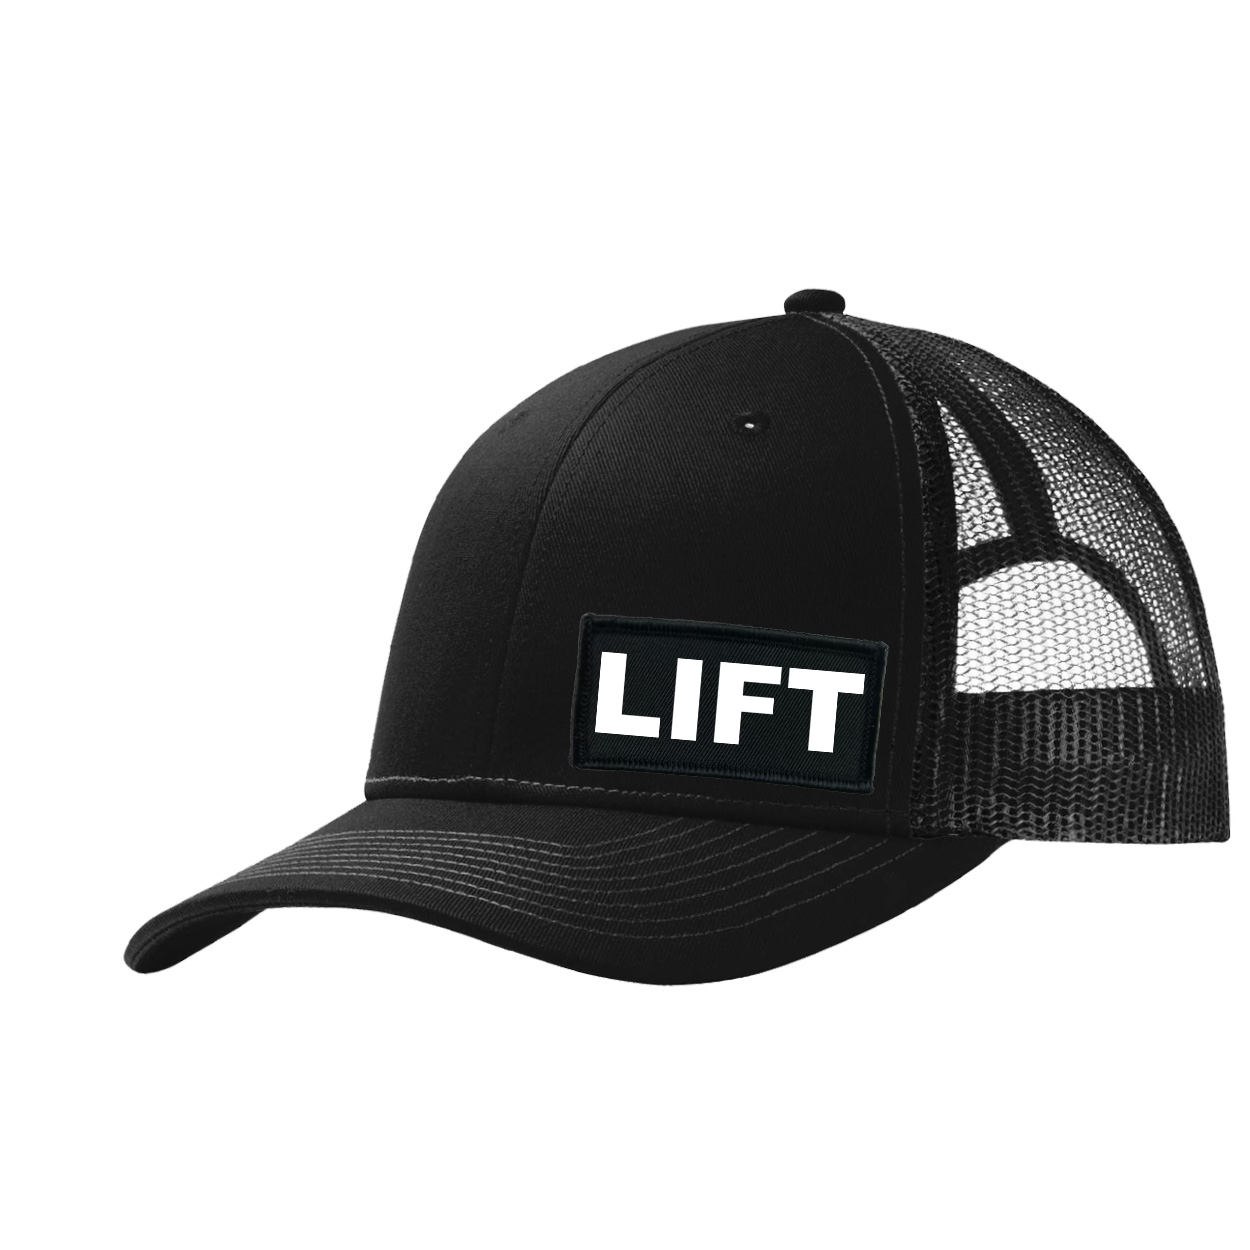 Lift Brand Logo Night Out Woven Patch Snapback Trucker Hat Black